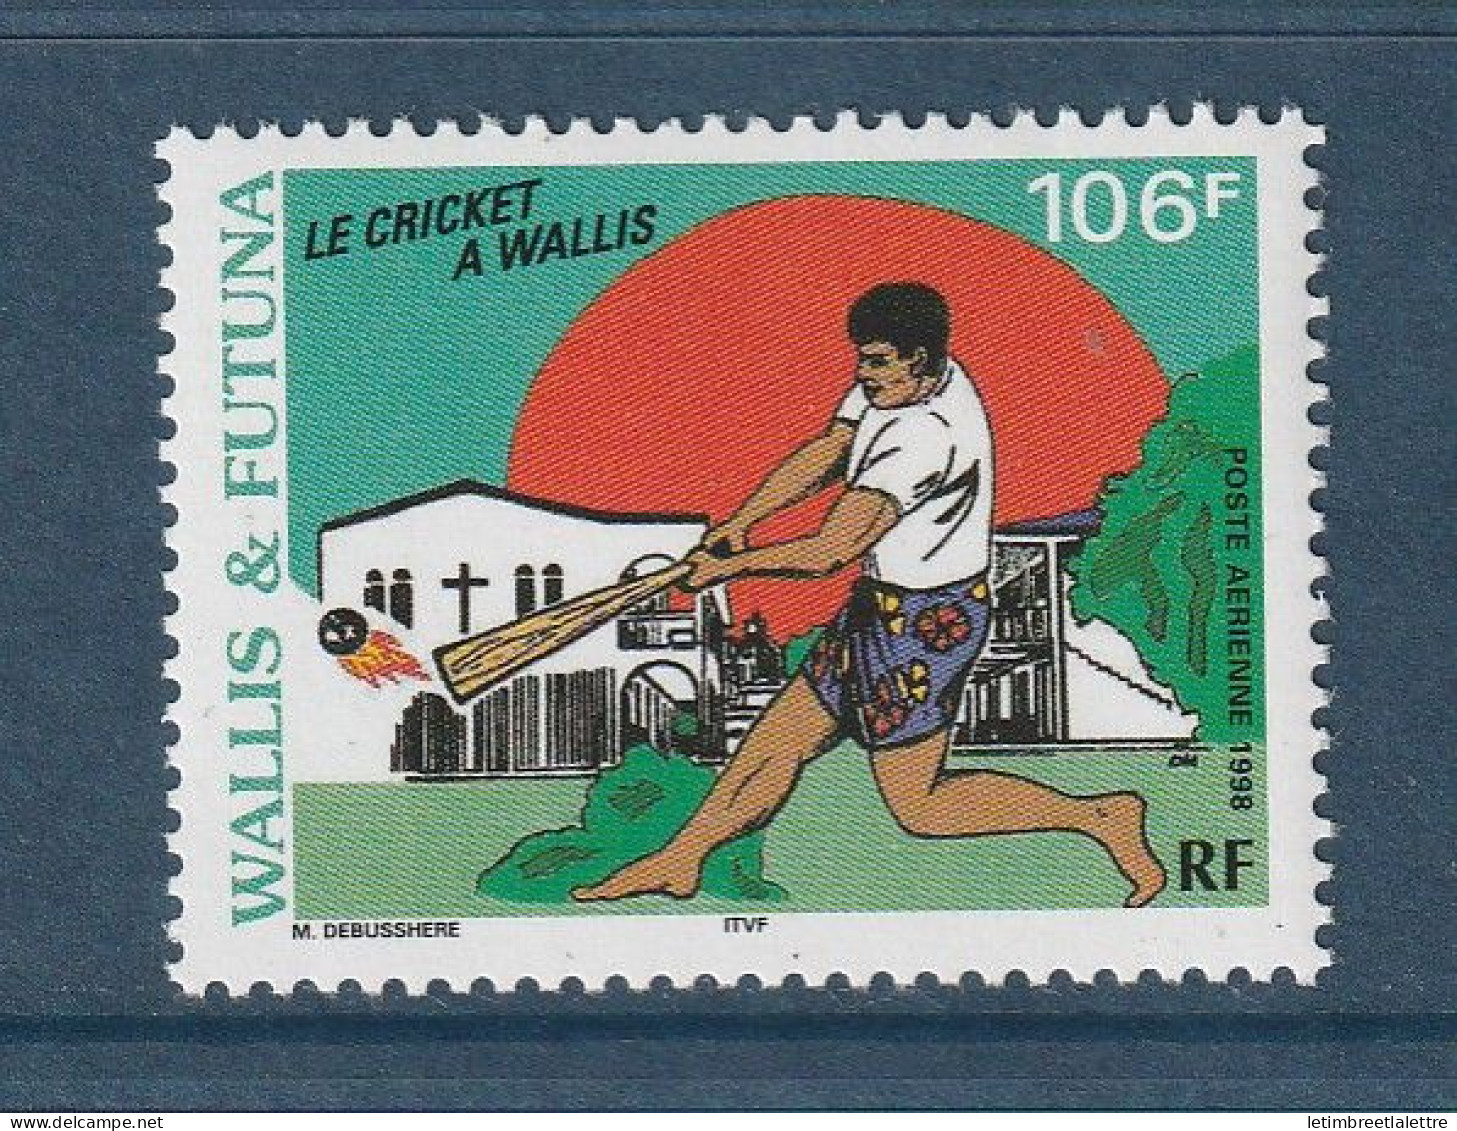 Wallis Et Futuna - Poste Aérienne - YT N° 204 ** - Neuf Sans Charnière 1998 - Ungebraucht